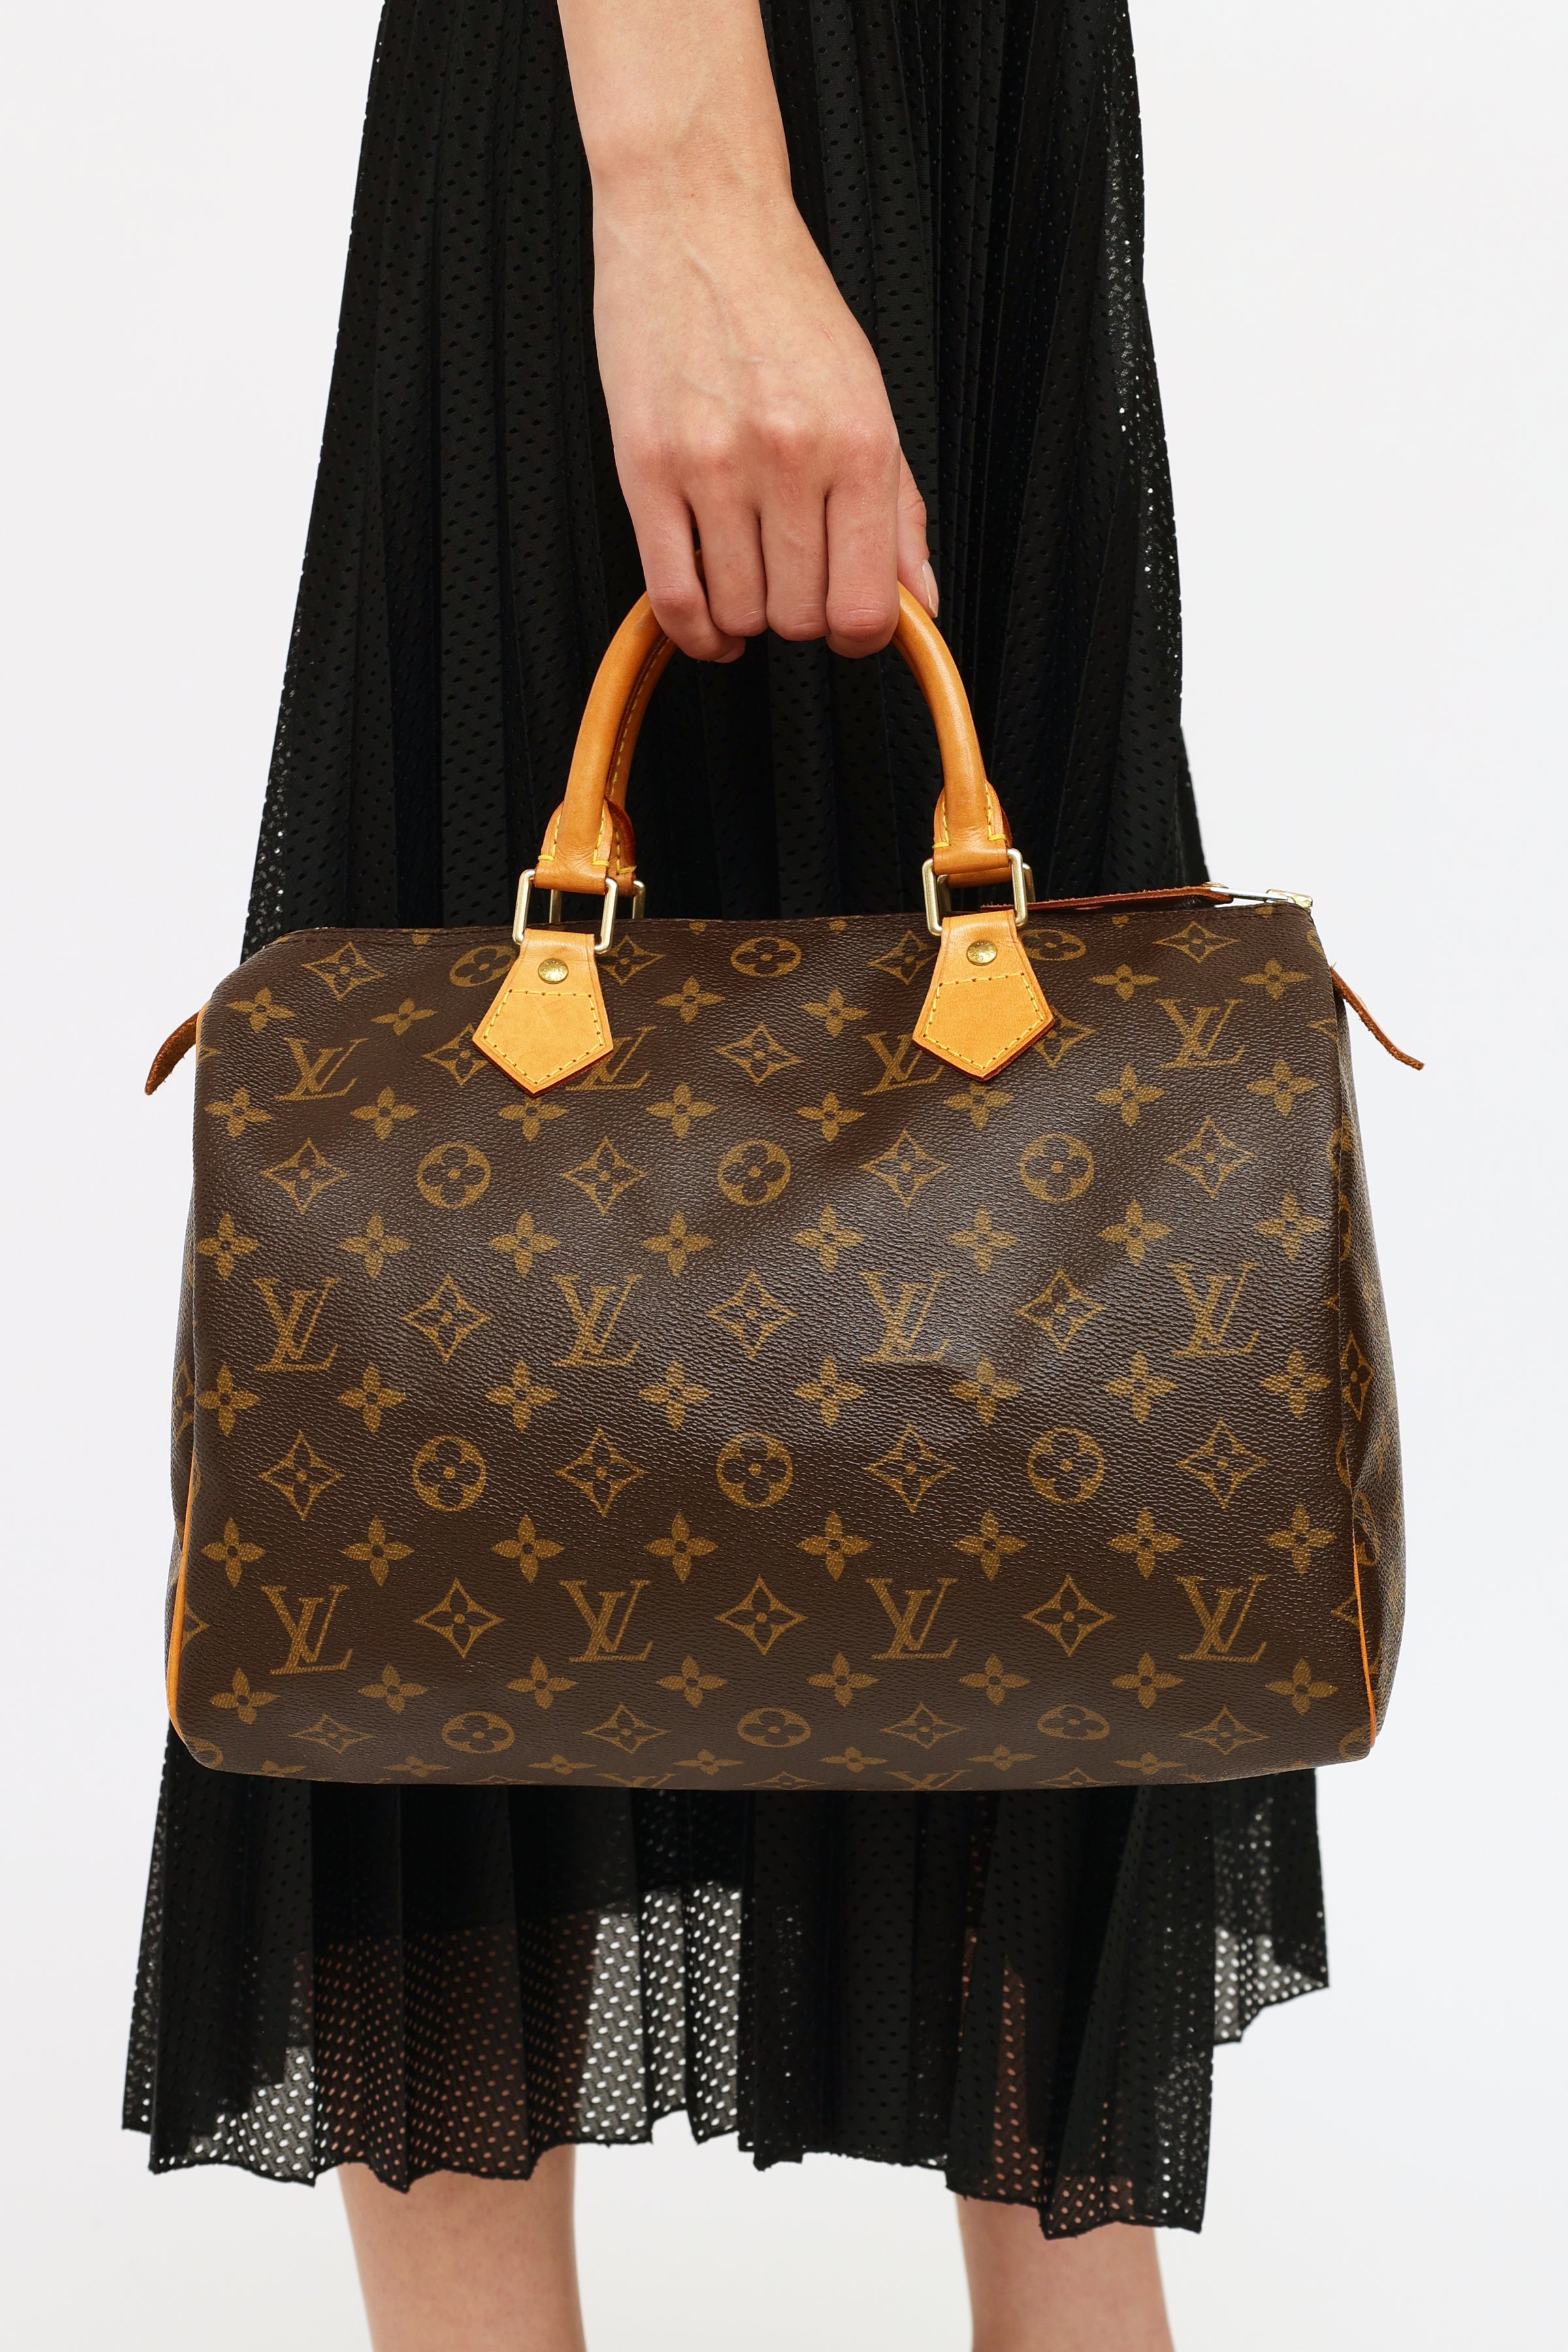 Louis Vuitton Canvas Monogram Speedy 30 Bag